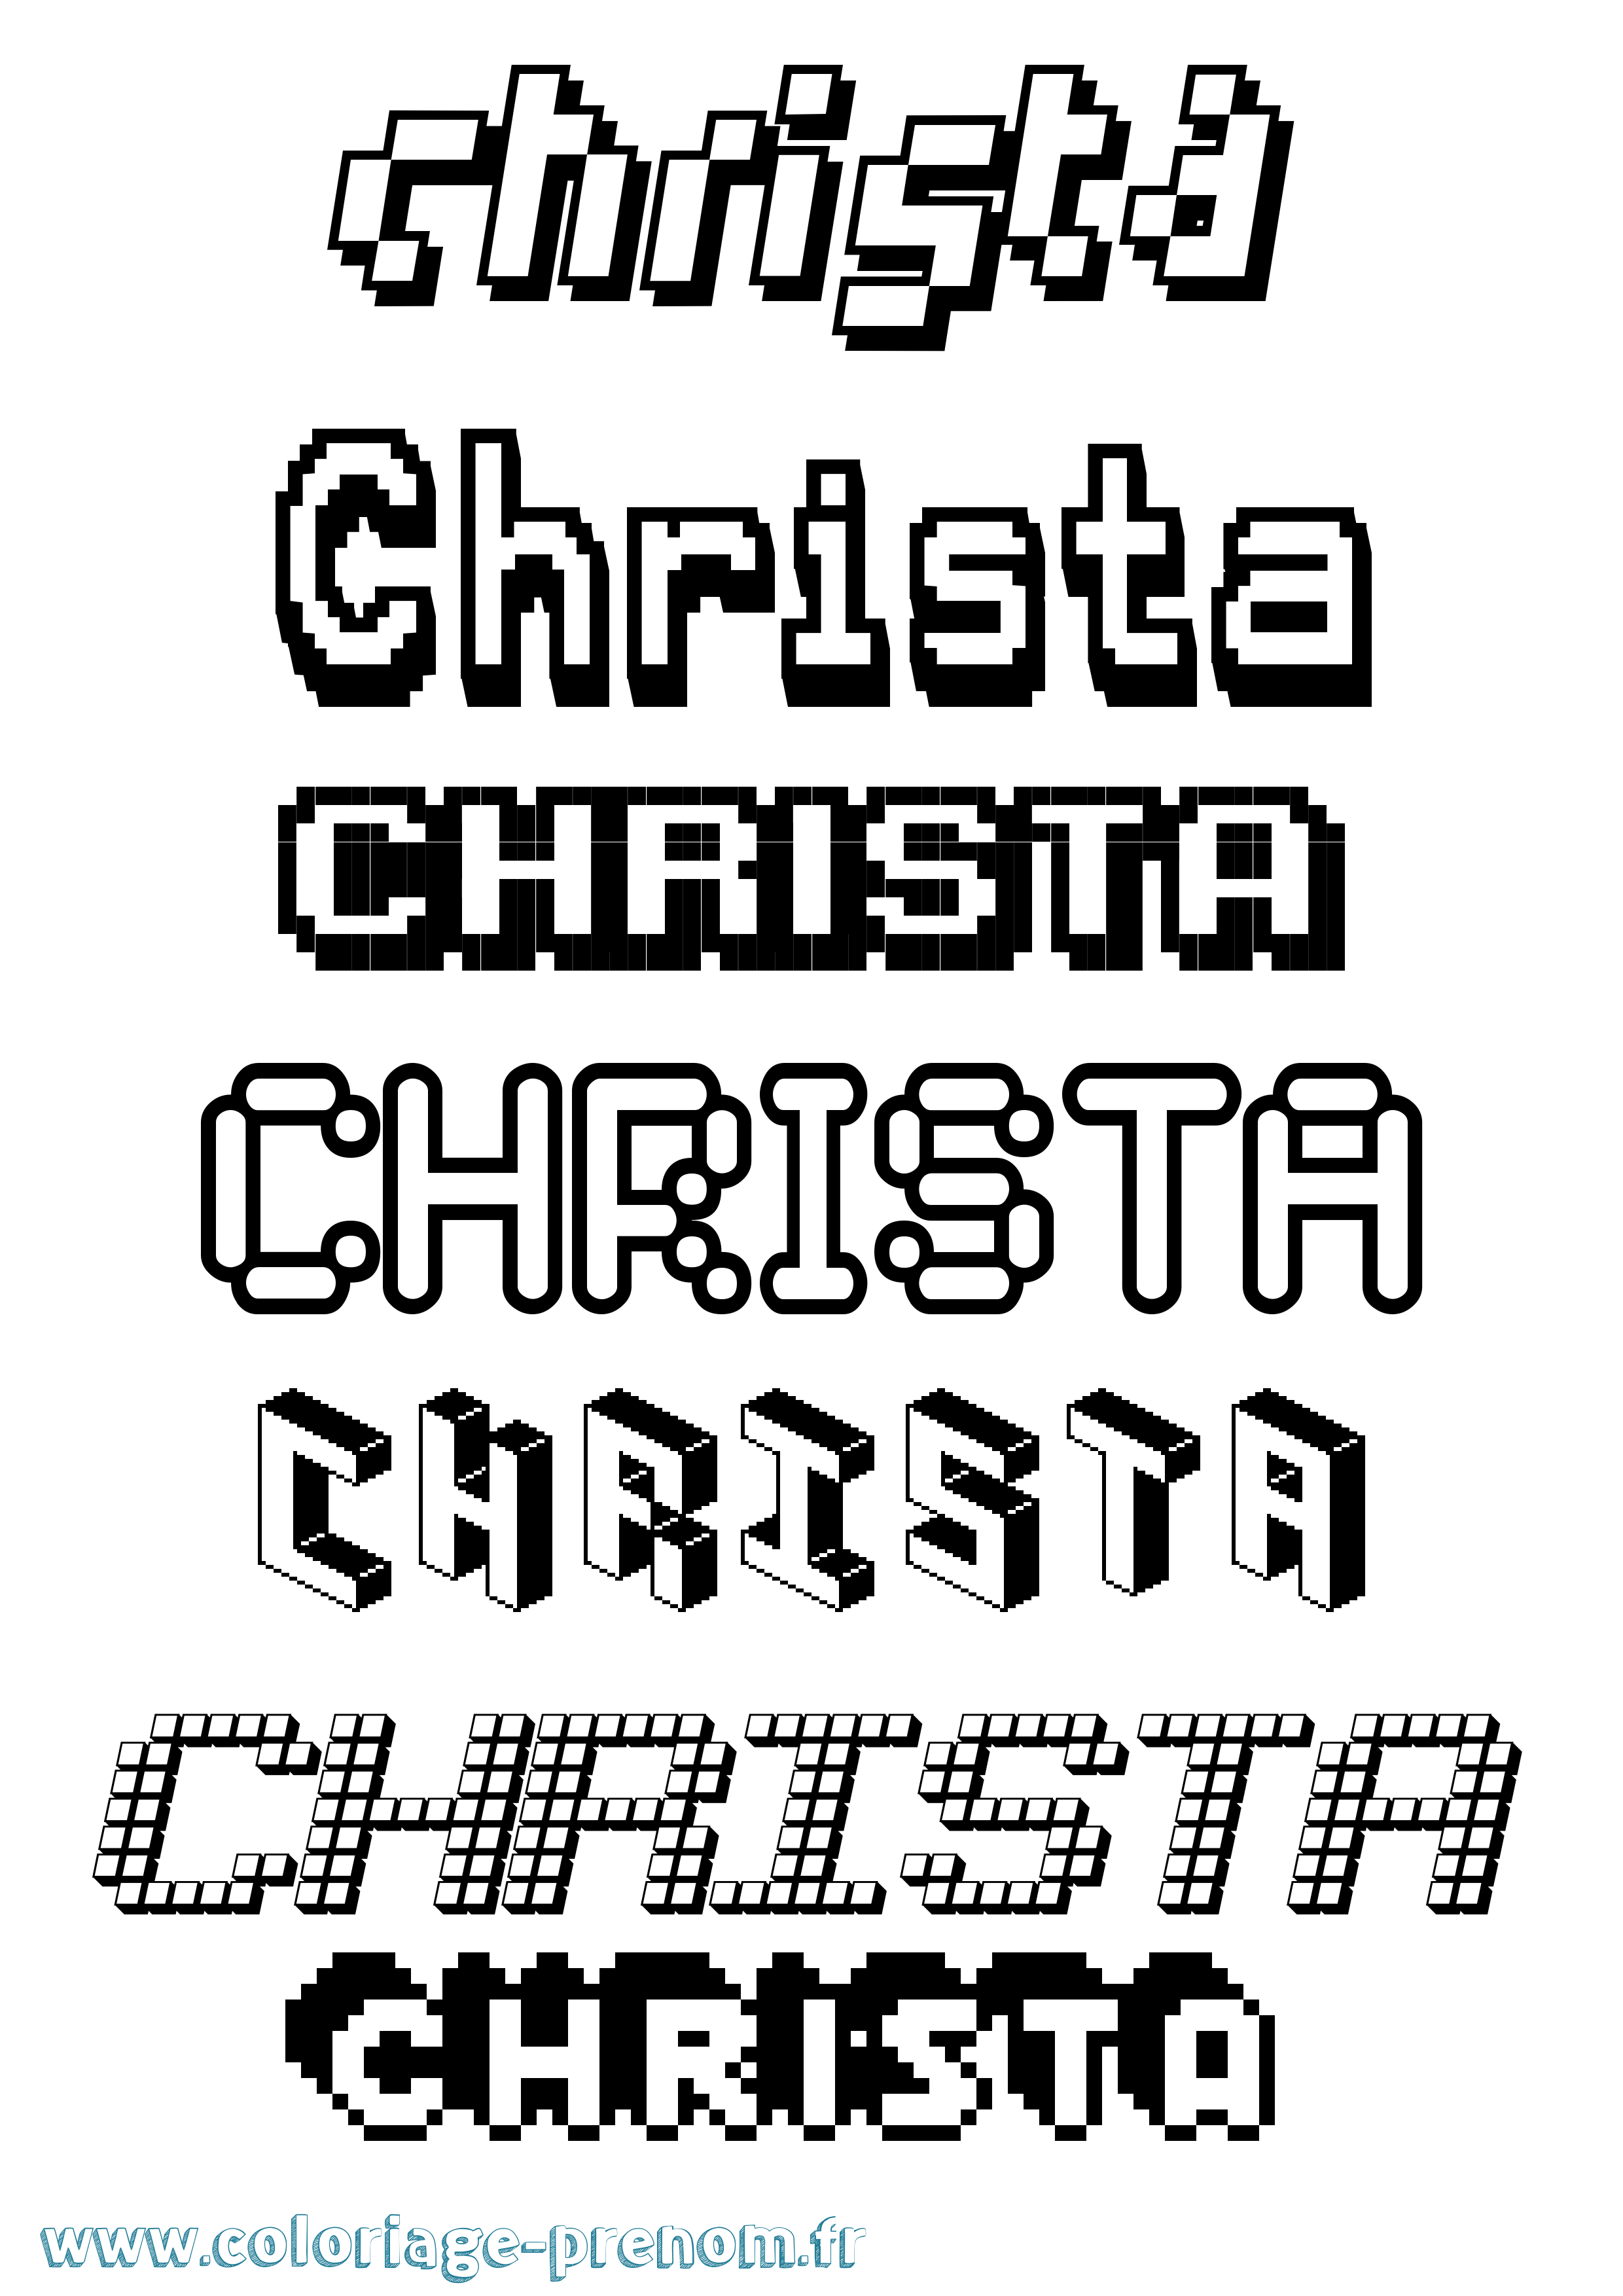 Coloriage prénom Christa Pixel